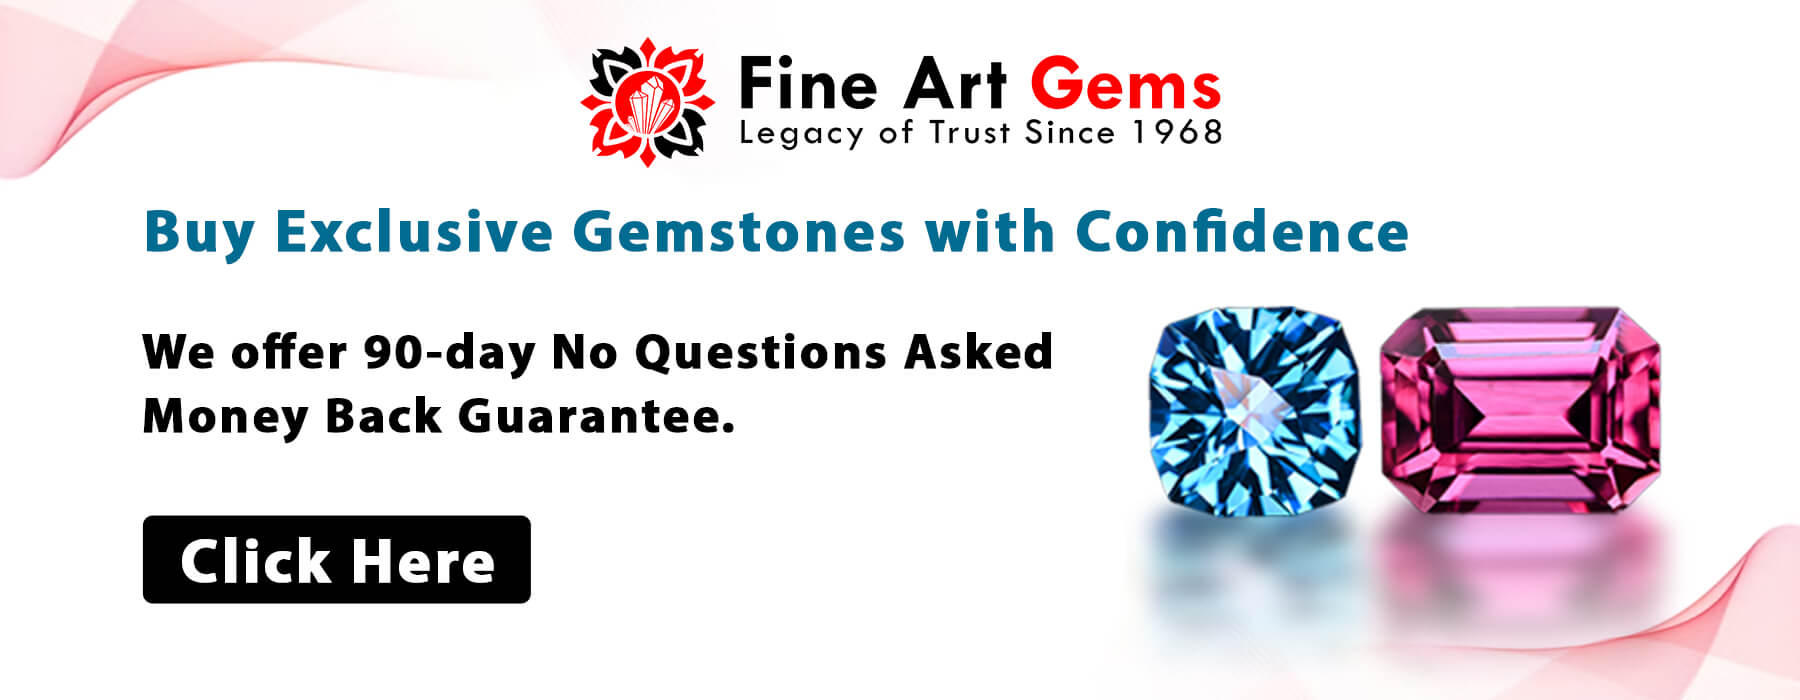 Fine Art Gems banner image